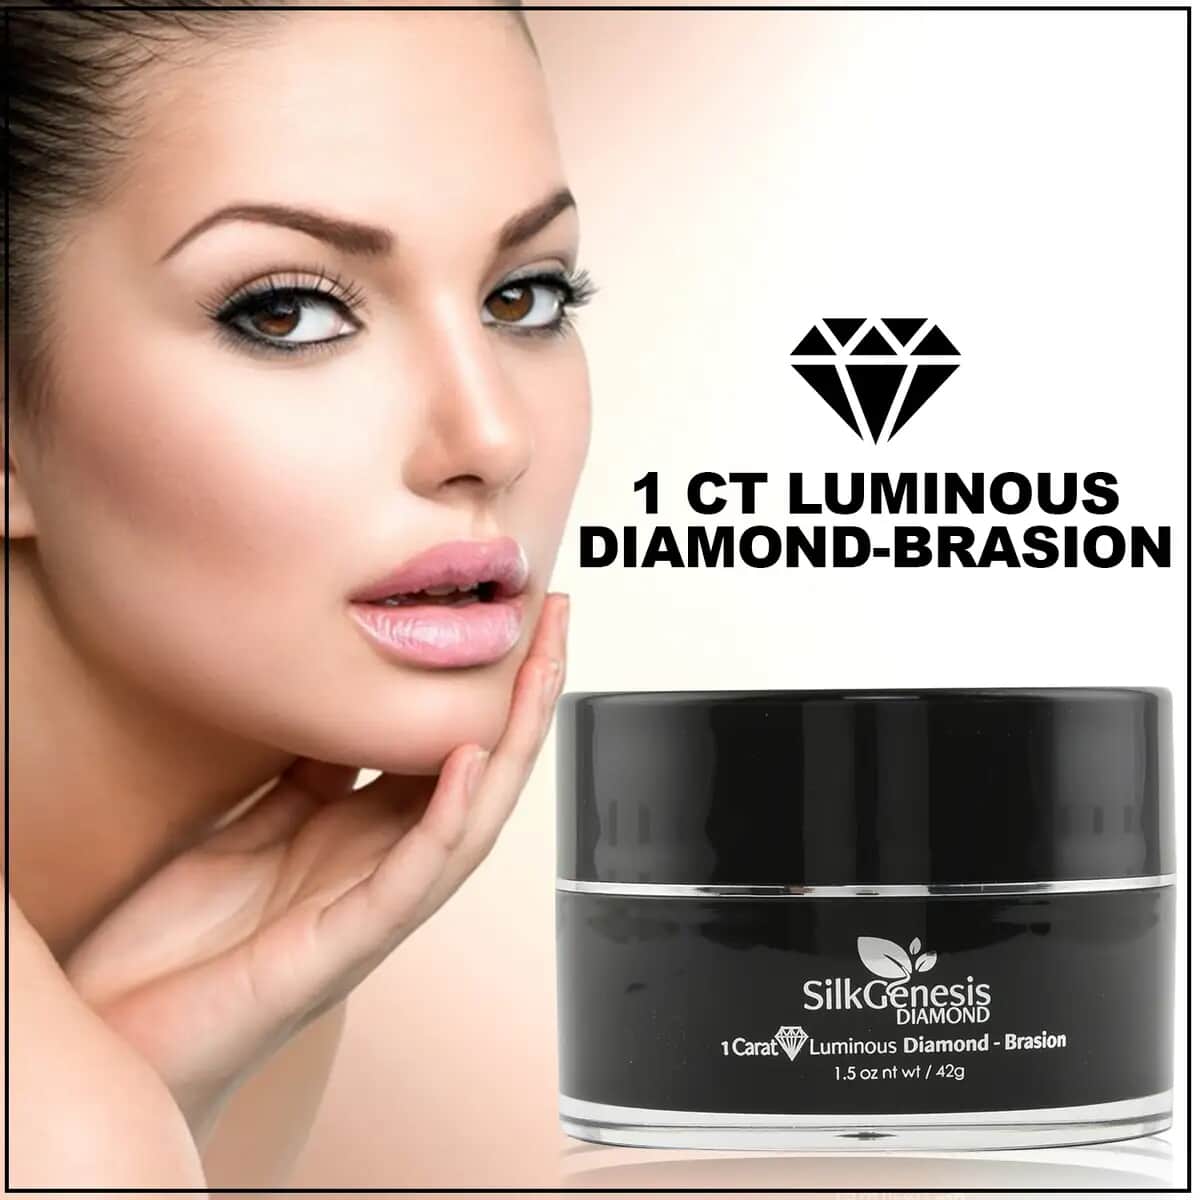 Silk Genesis Luminous Diamond Brasion Facial Scrub Exfoliates Skin Reduce Lines Wrinkles image number 1